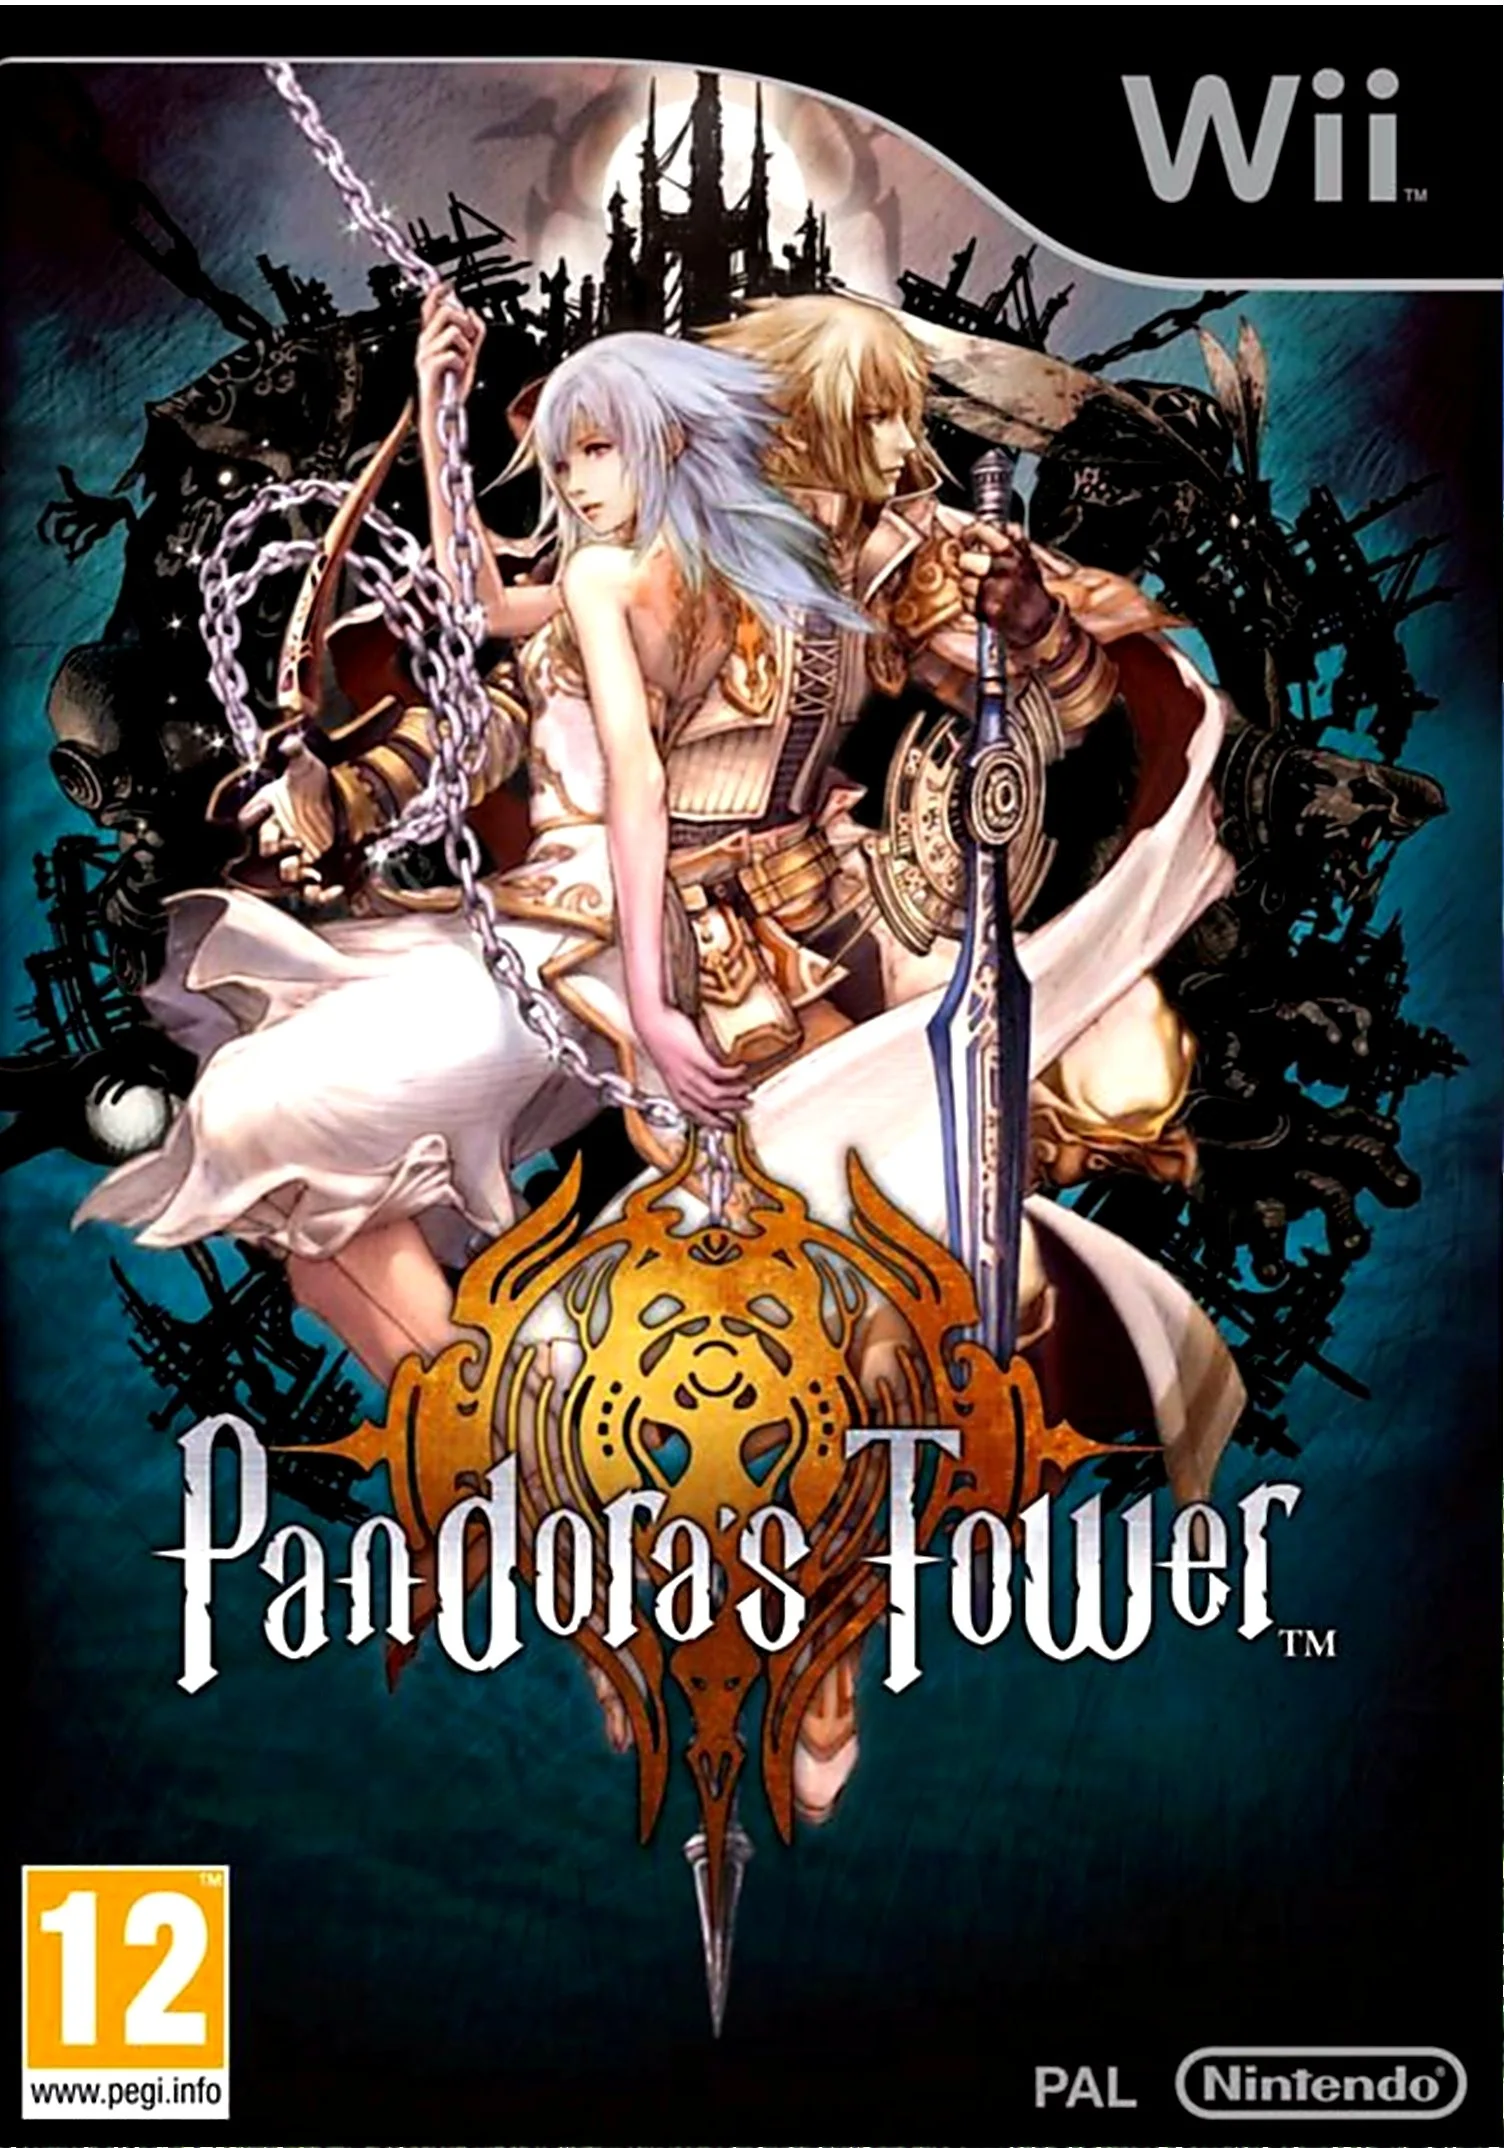 Pandora's Tower